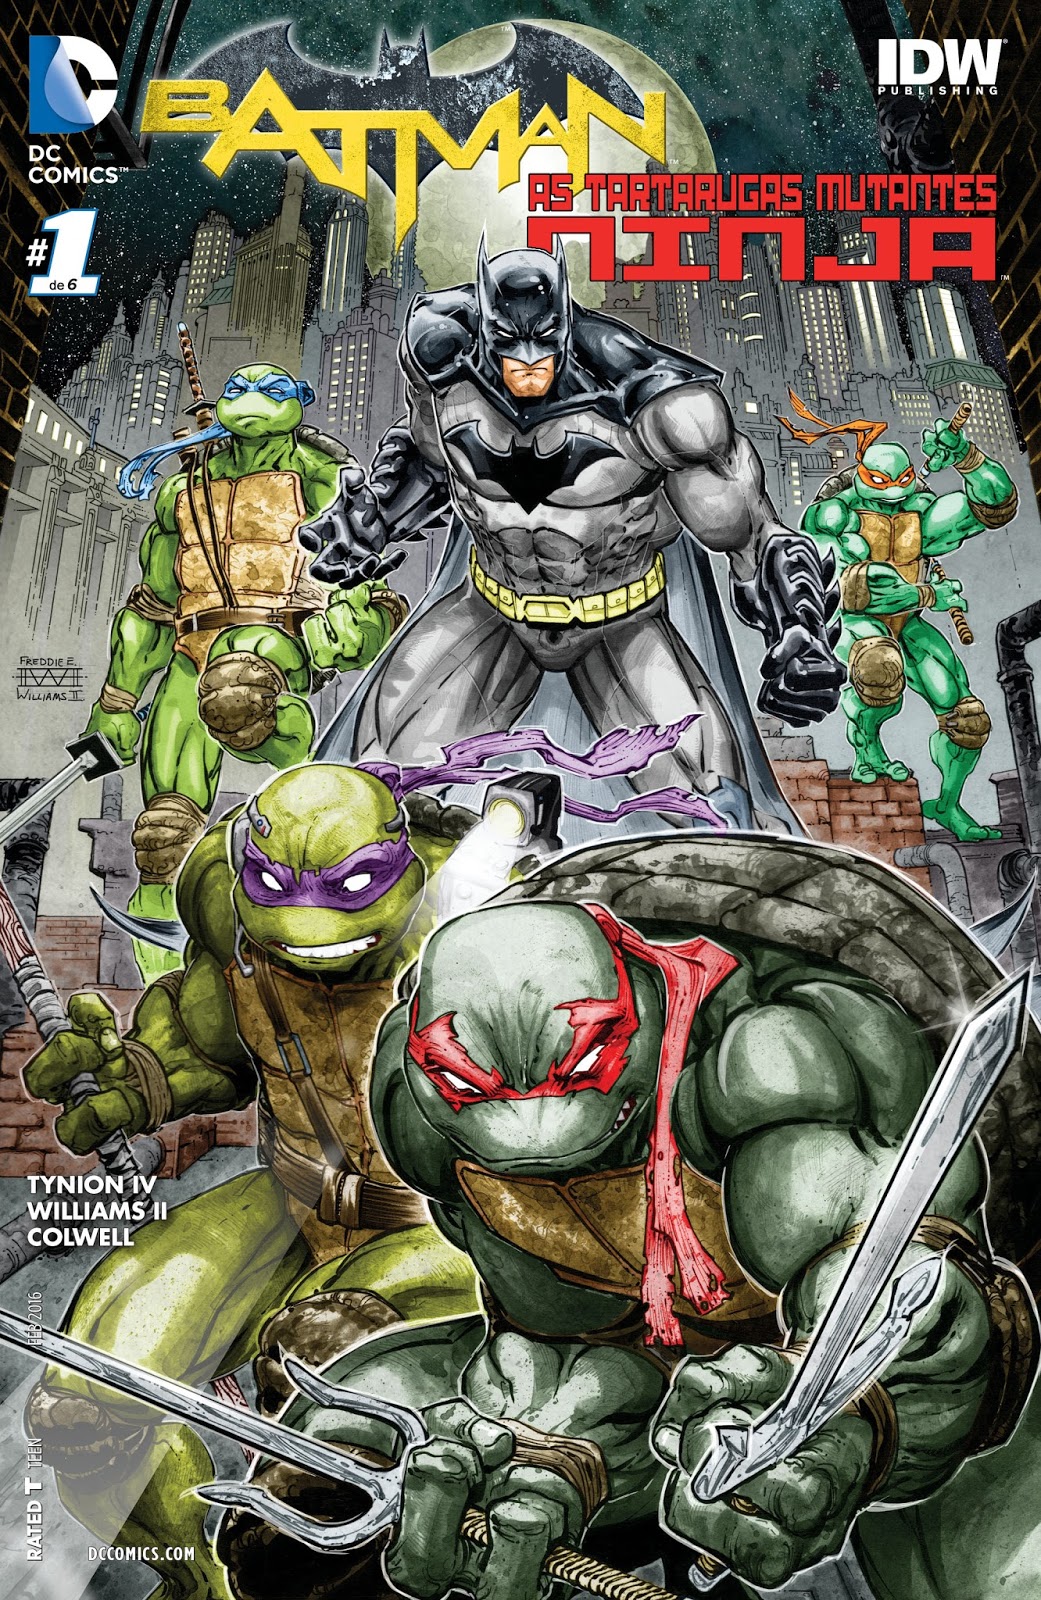 Crossover de Batman e tartarugas ninja: A nova aposta funcionará? – INFOX